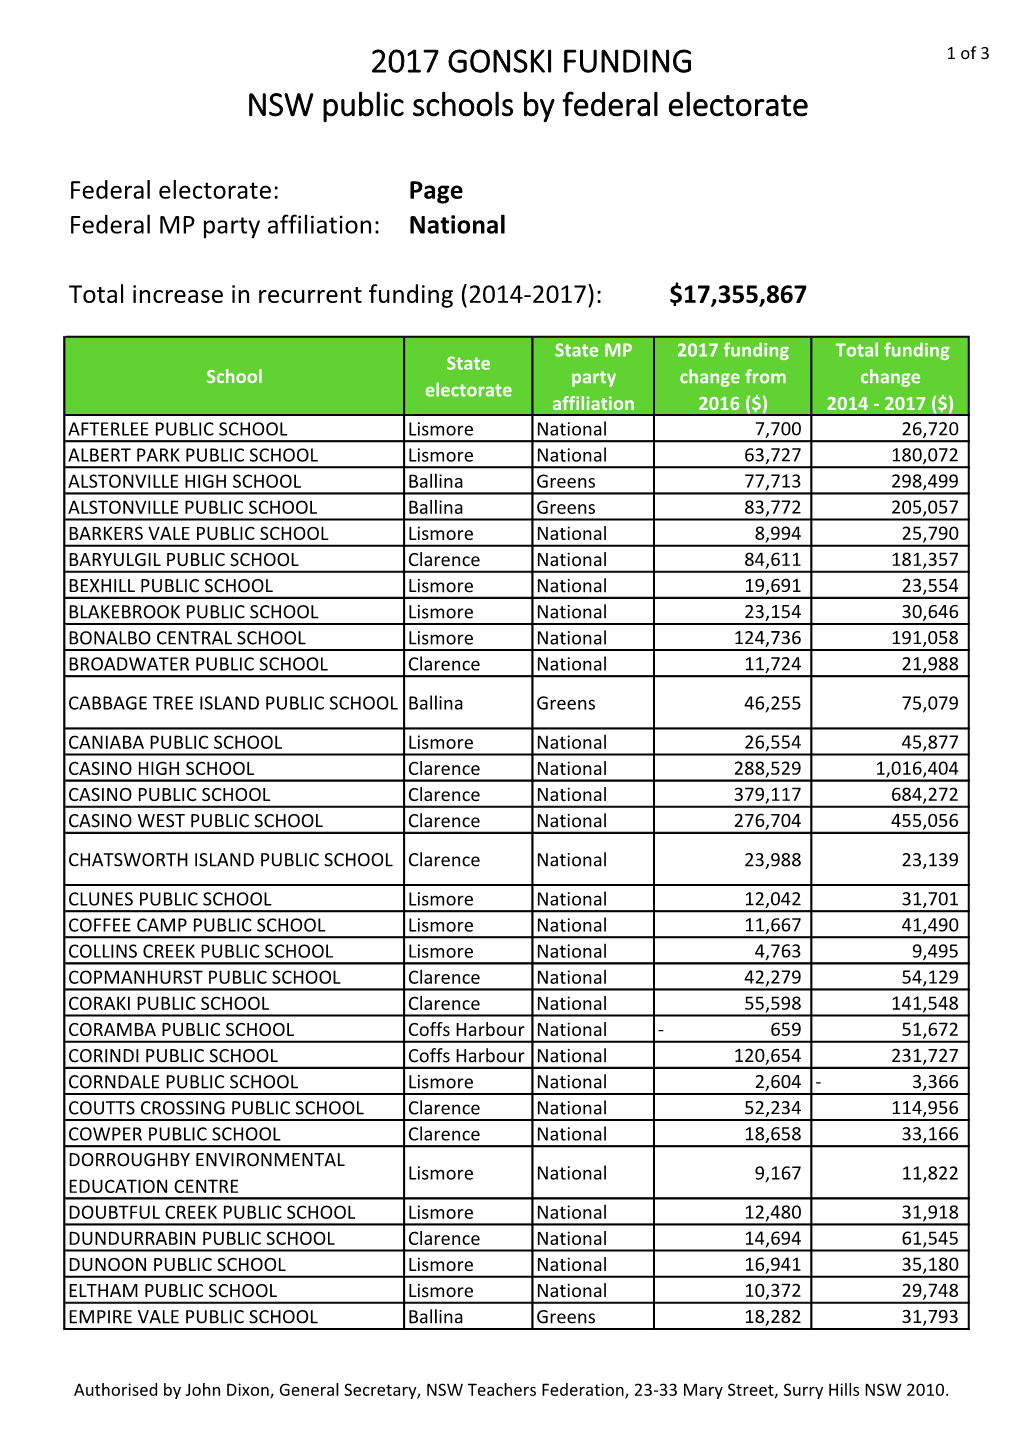 2017 GONSKI FUNDING NSW Public Schools by Federal Electorate